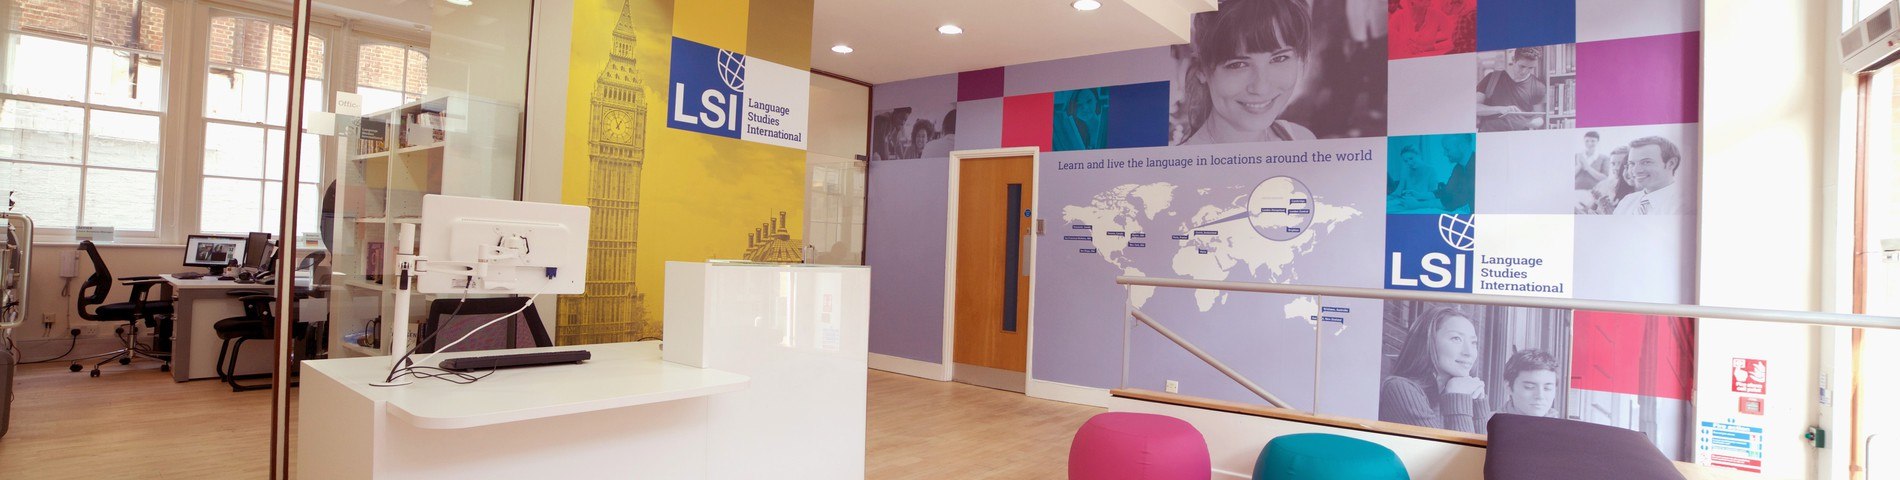 LSI - Language Studies International - Central 사진 1